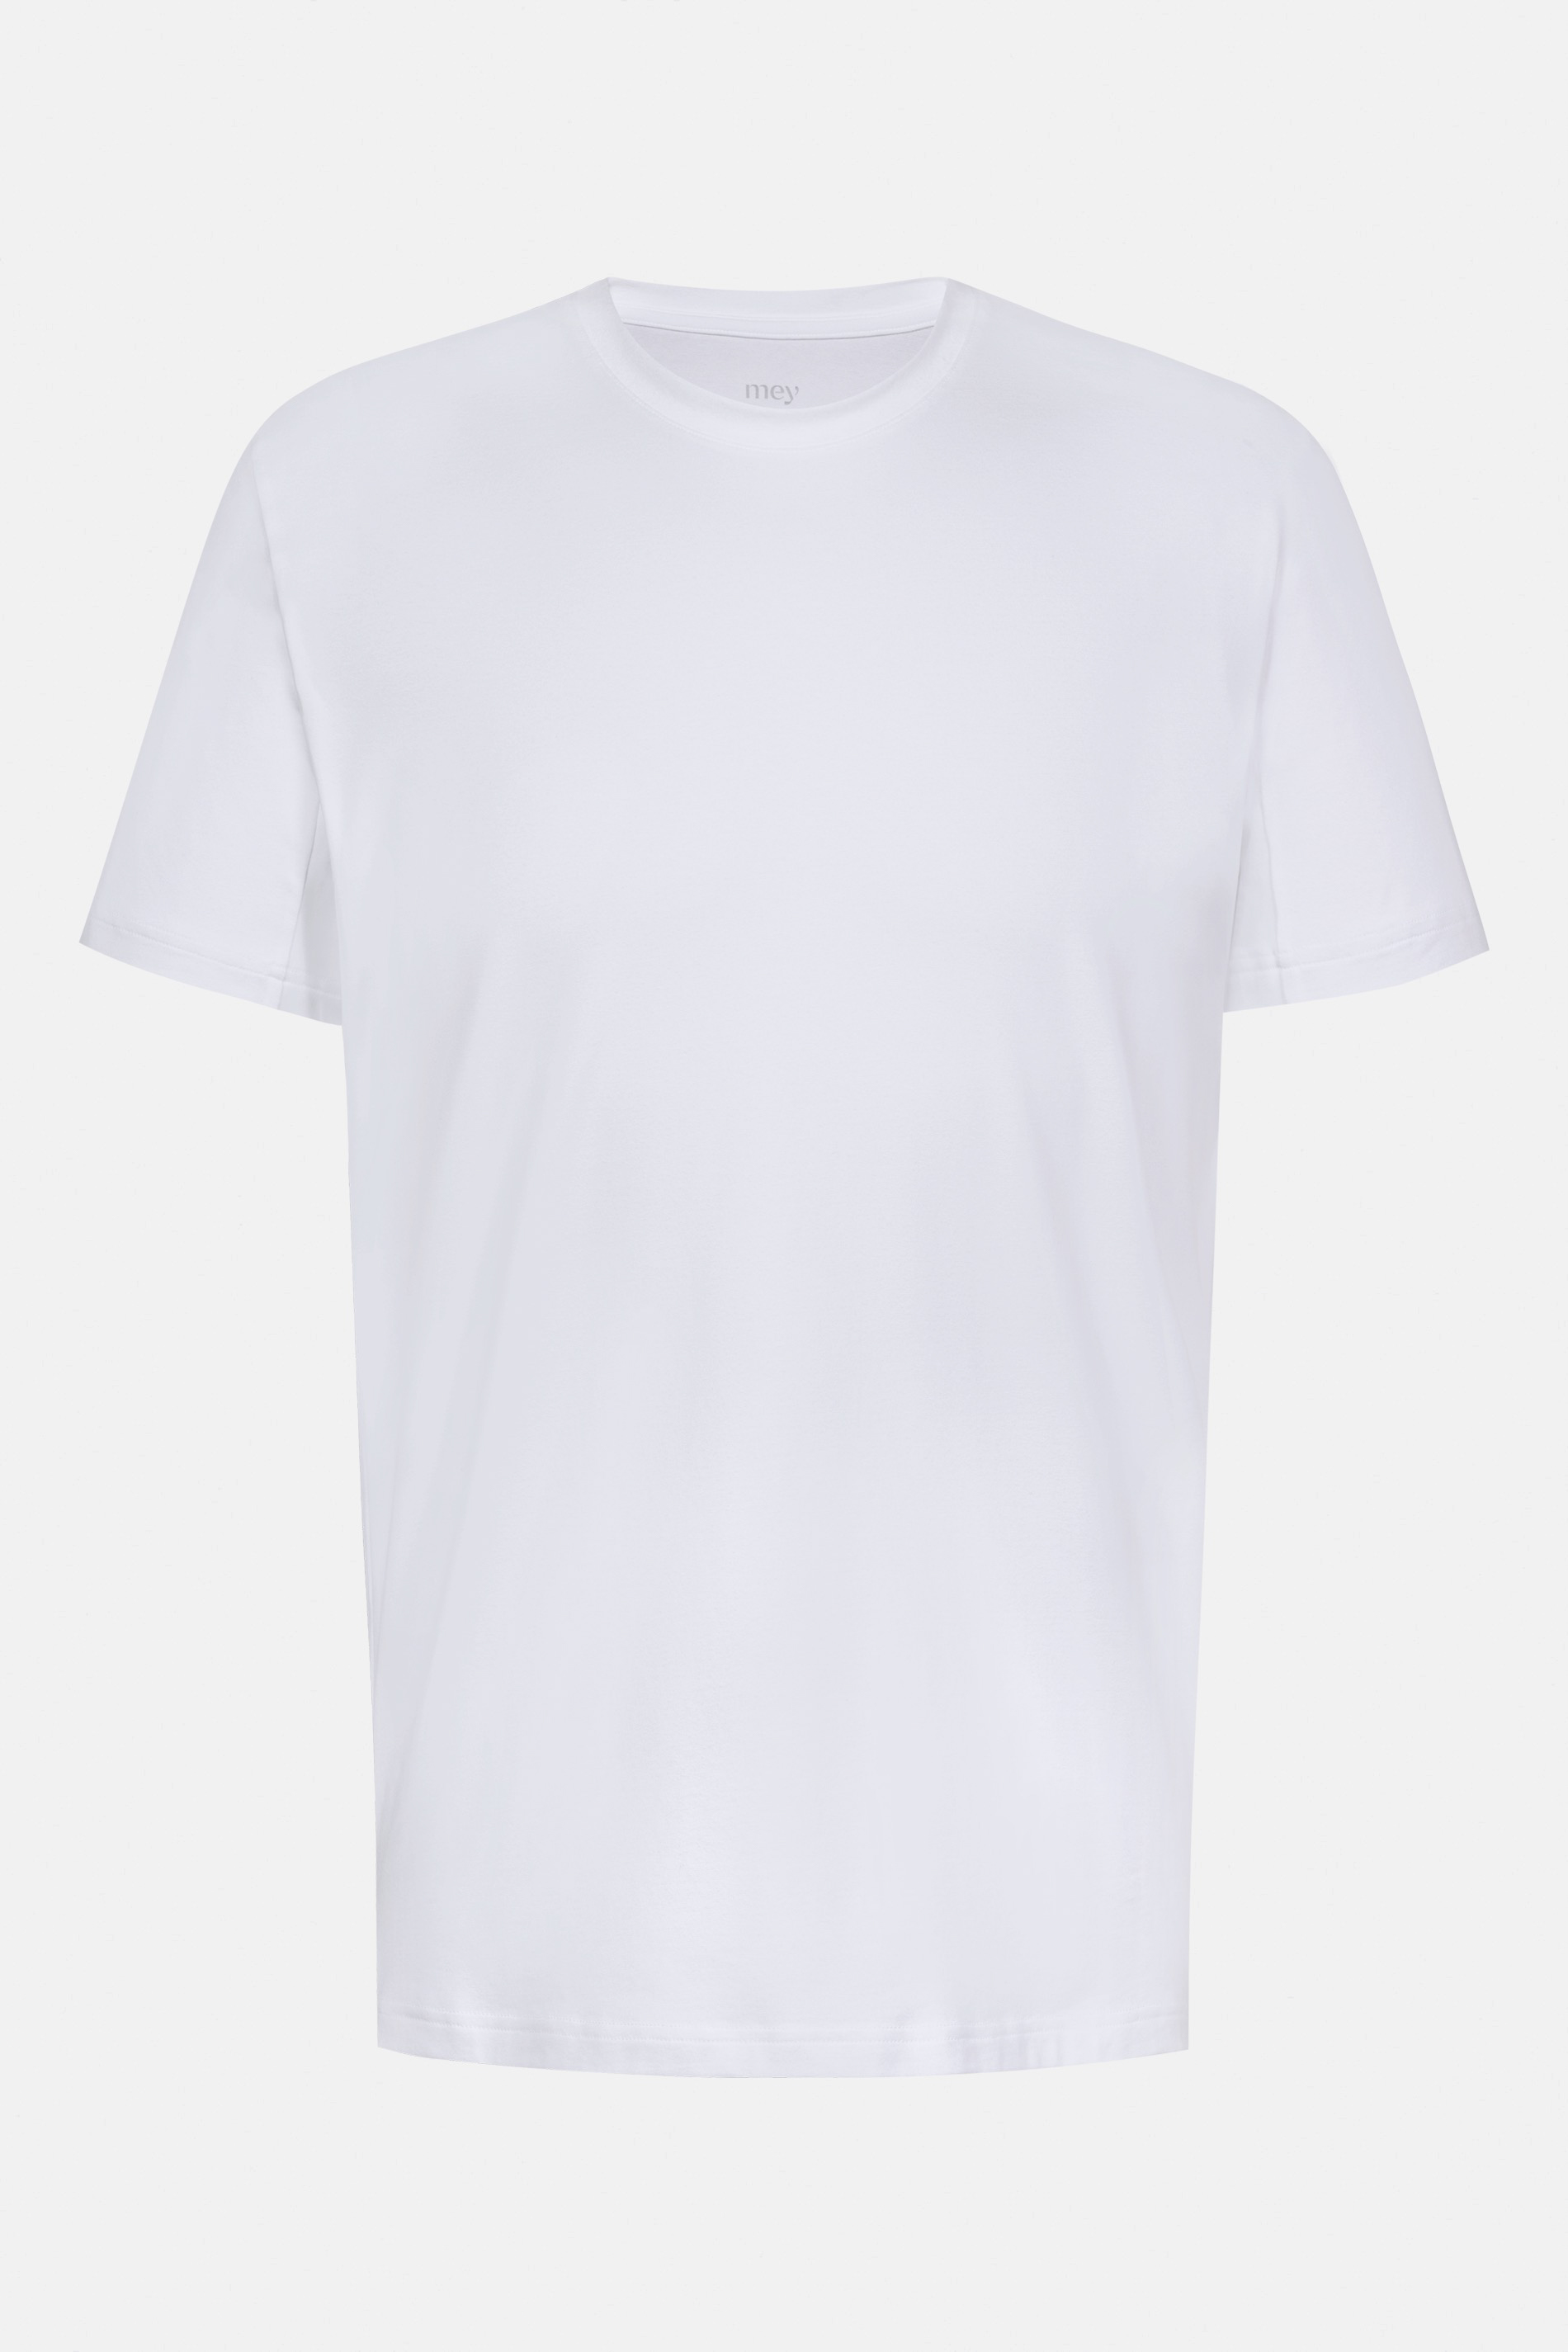 Hybrid T-Shirt Weiss Serie Hybrid T-Shirt Freisteller | mey®